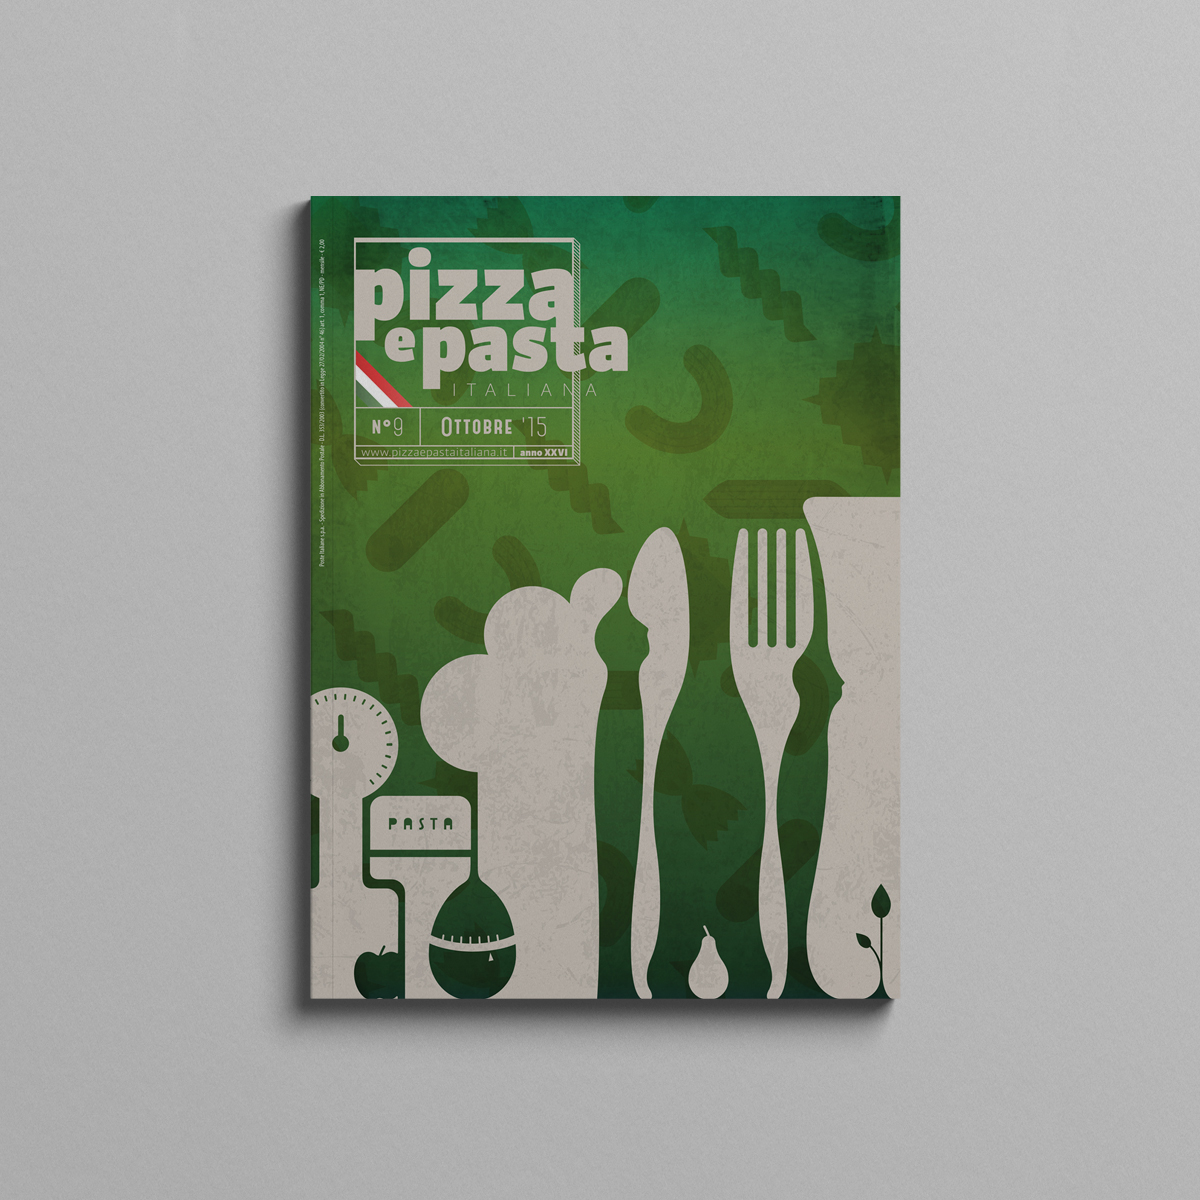 Pizza e pasta copertina verde